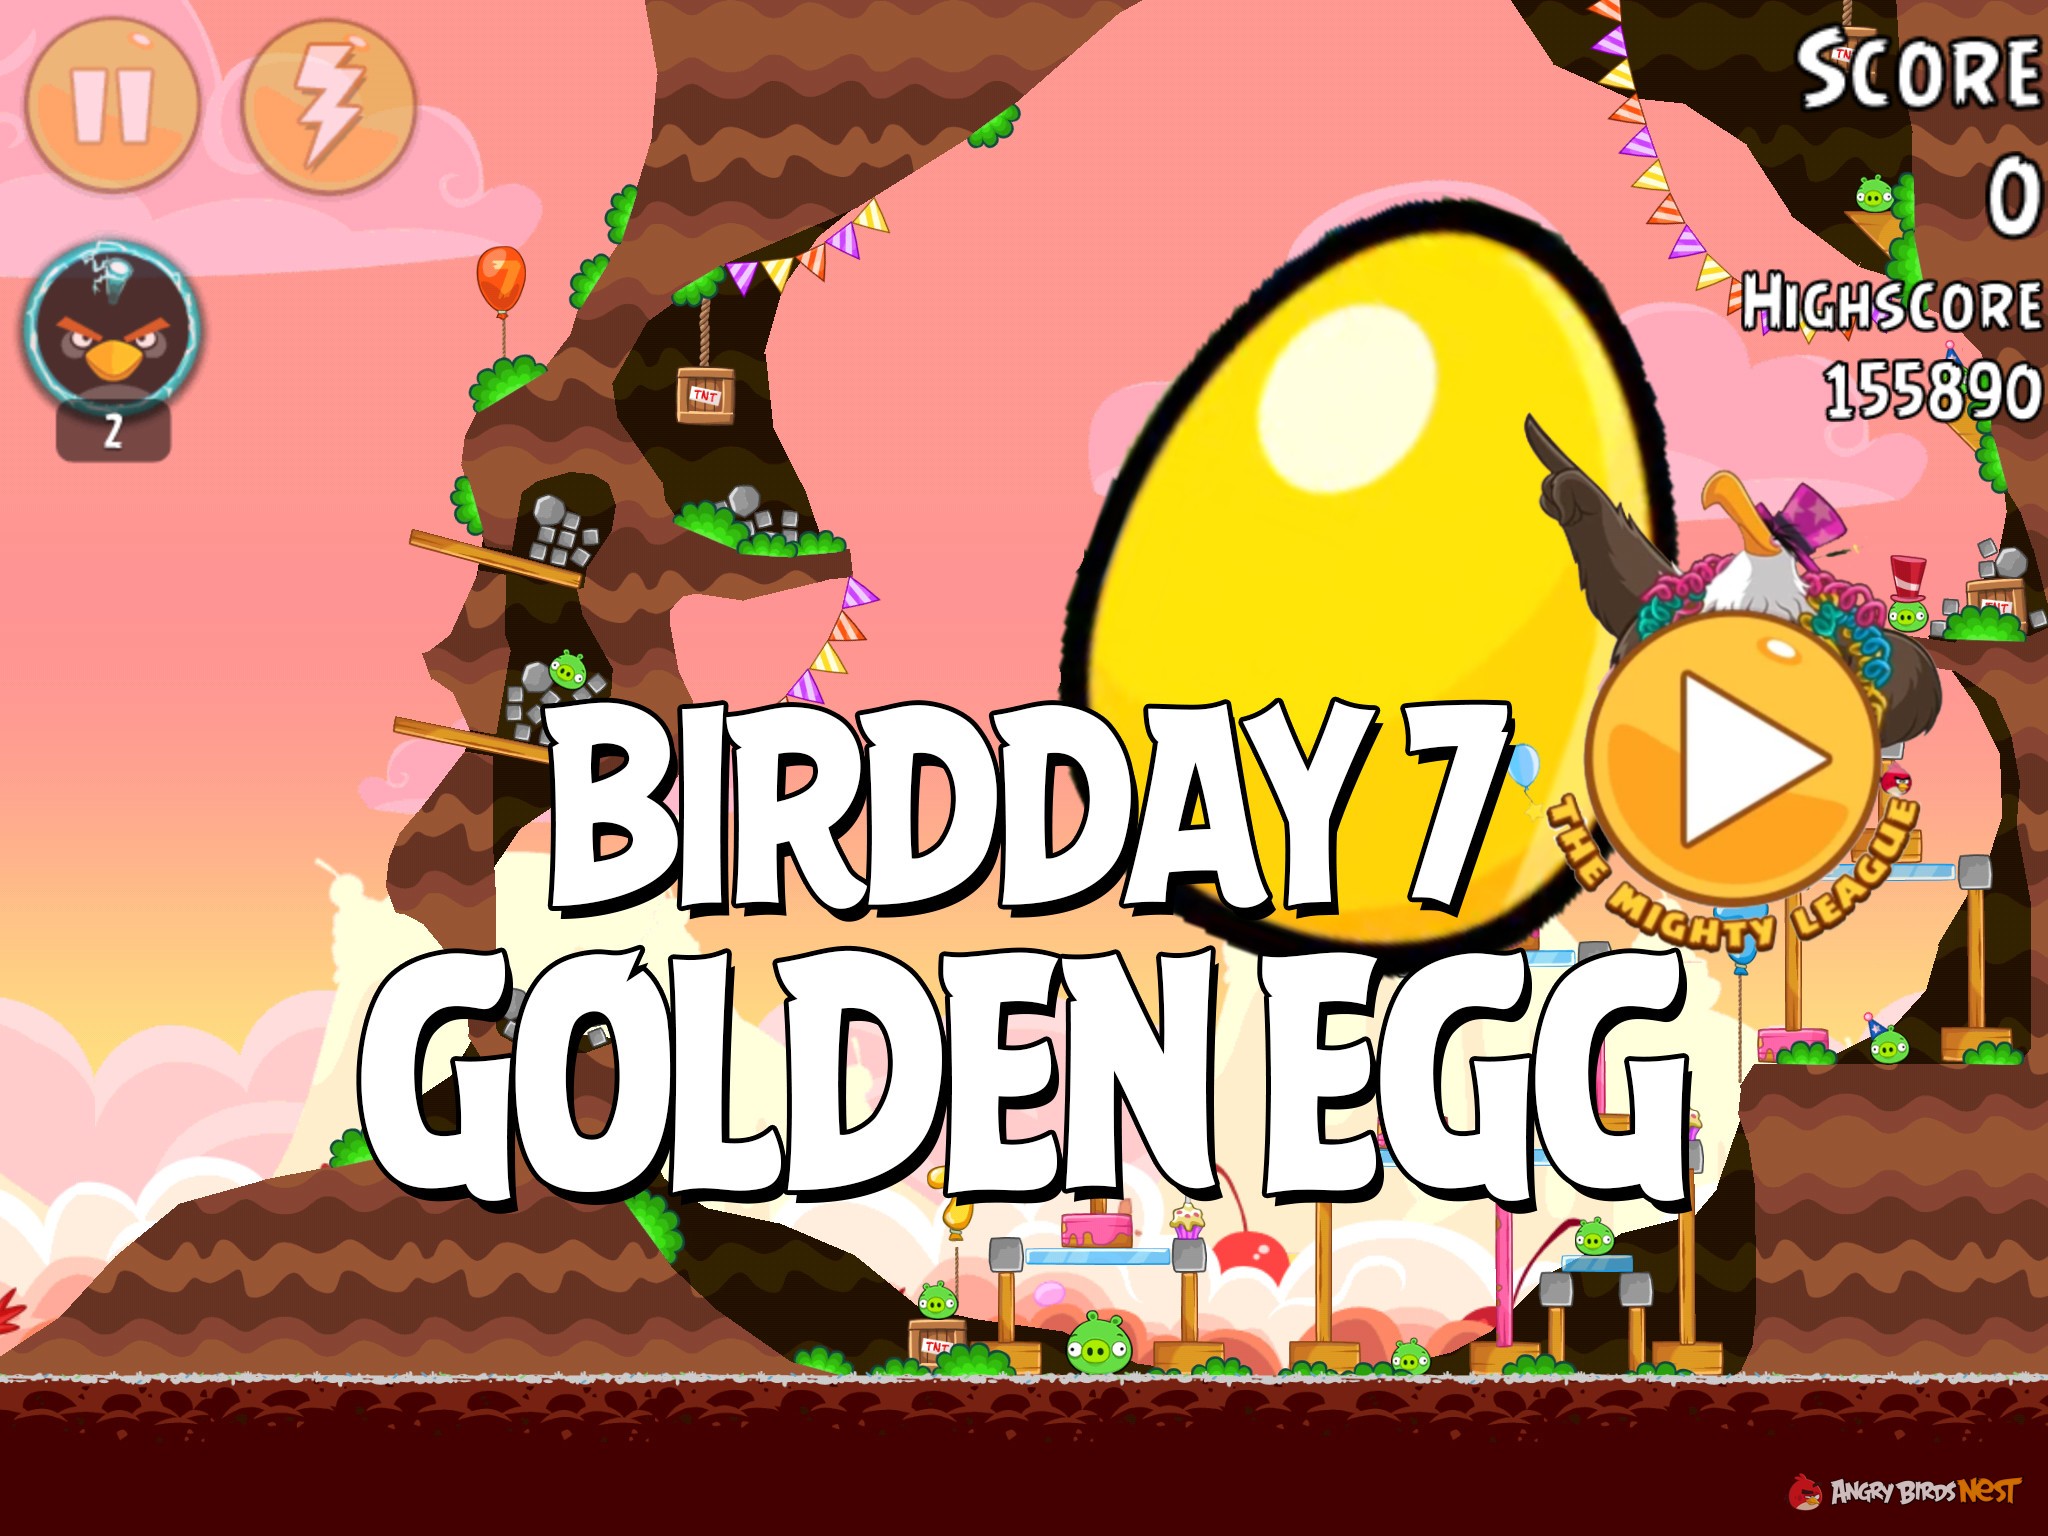 angry-birds-birdday-7-golden-egg